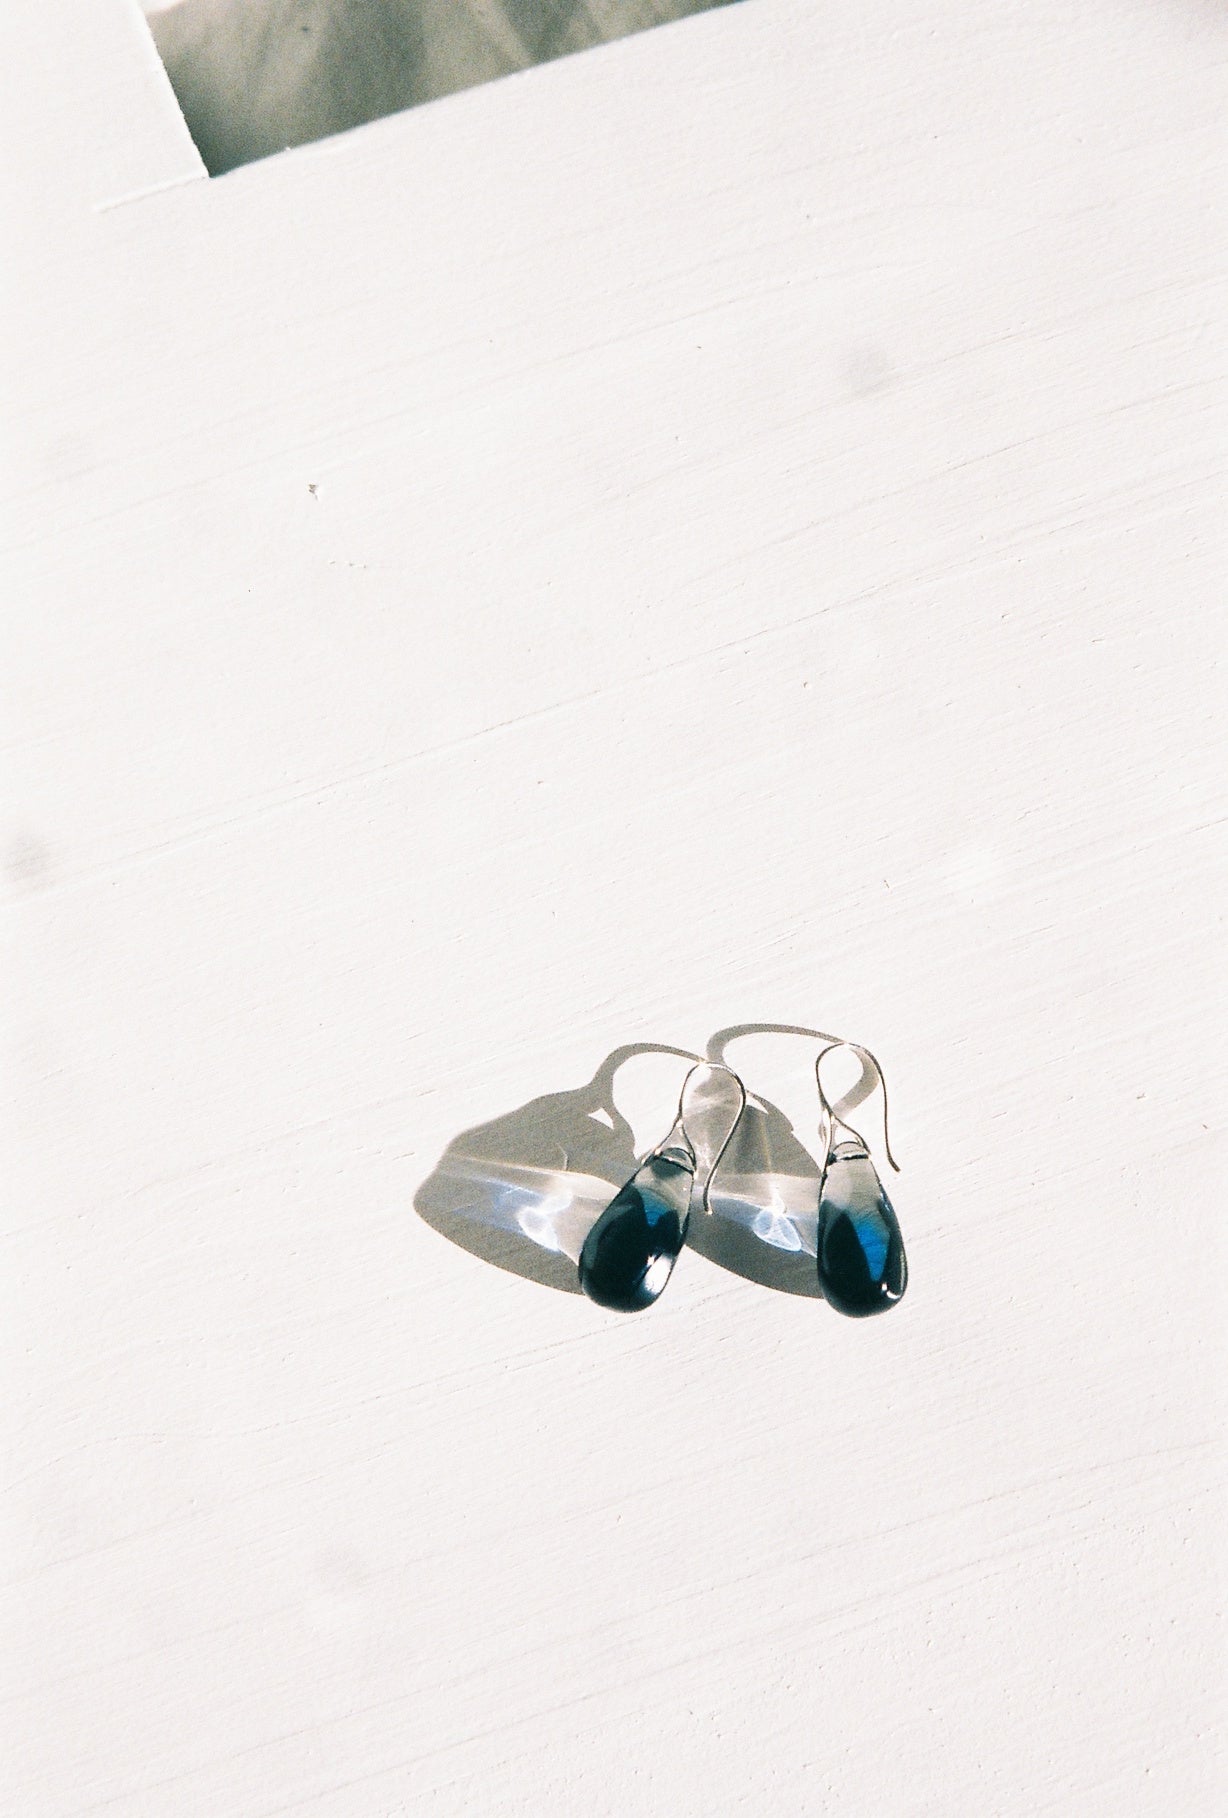 Barna earrings - Smoke and blue